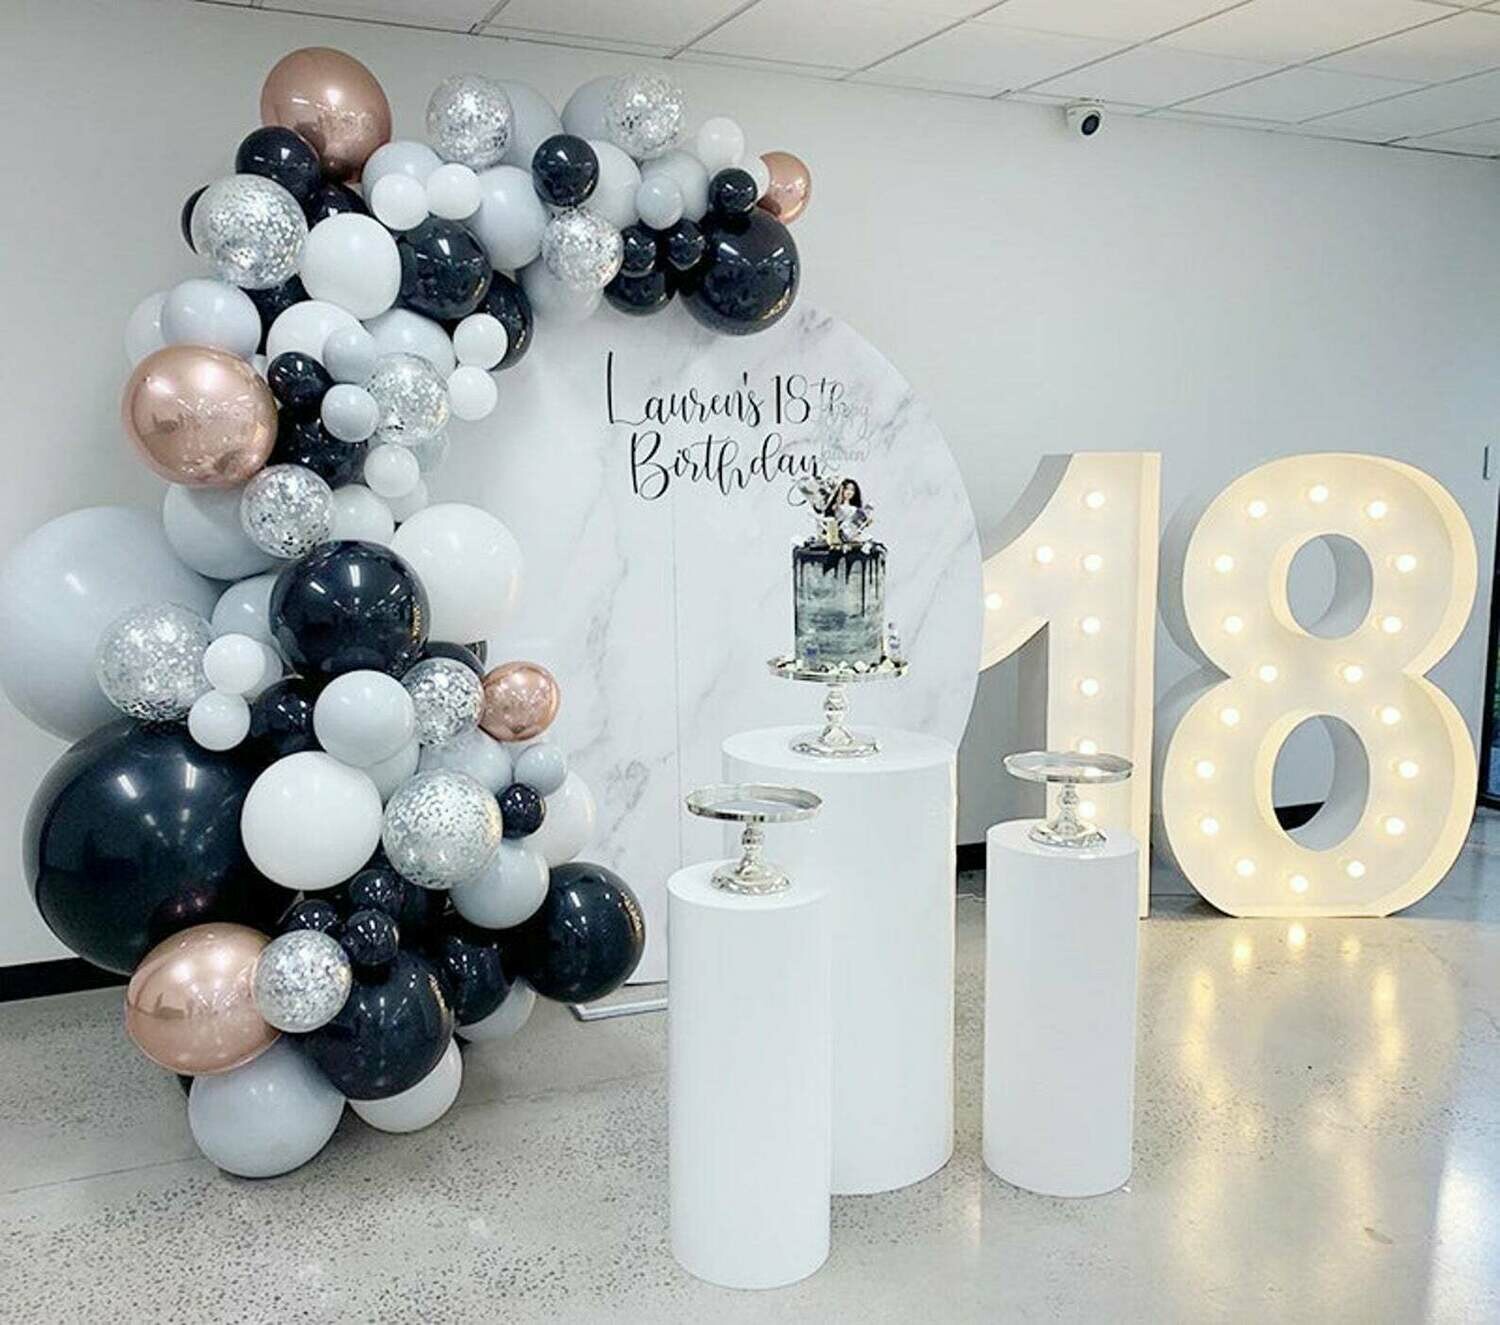 125pcs Black White Grey Balloons Garland Arch Kit 4D Rose Gold Ballon Birthday Wedding Baby Shower Anniversary Party Decorations